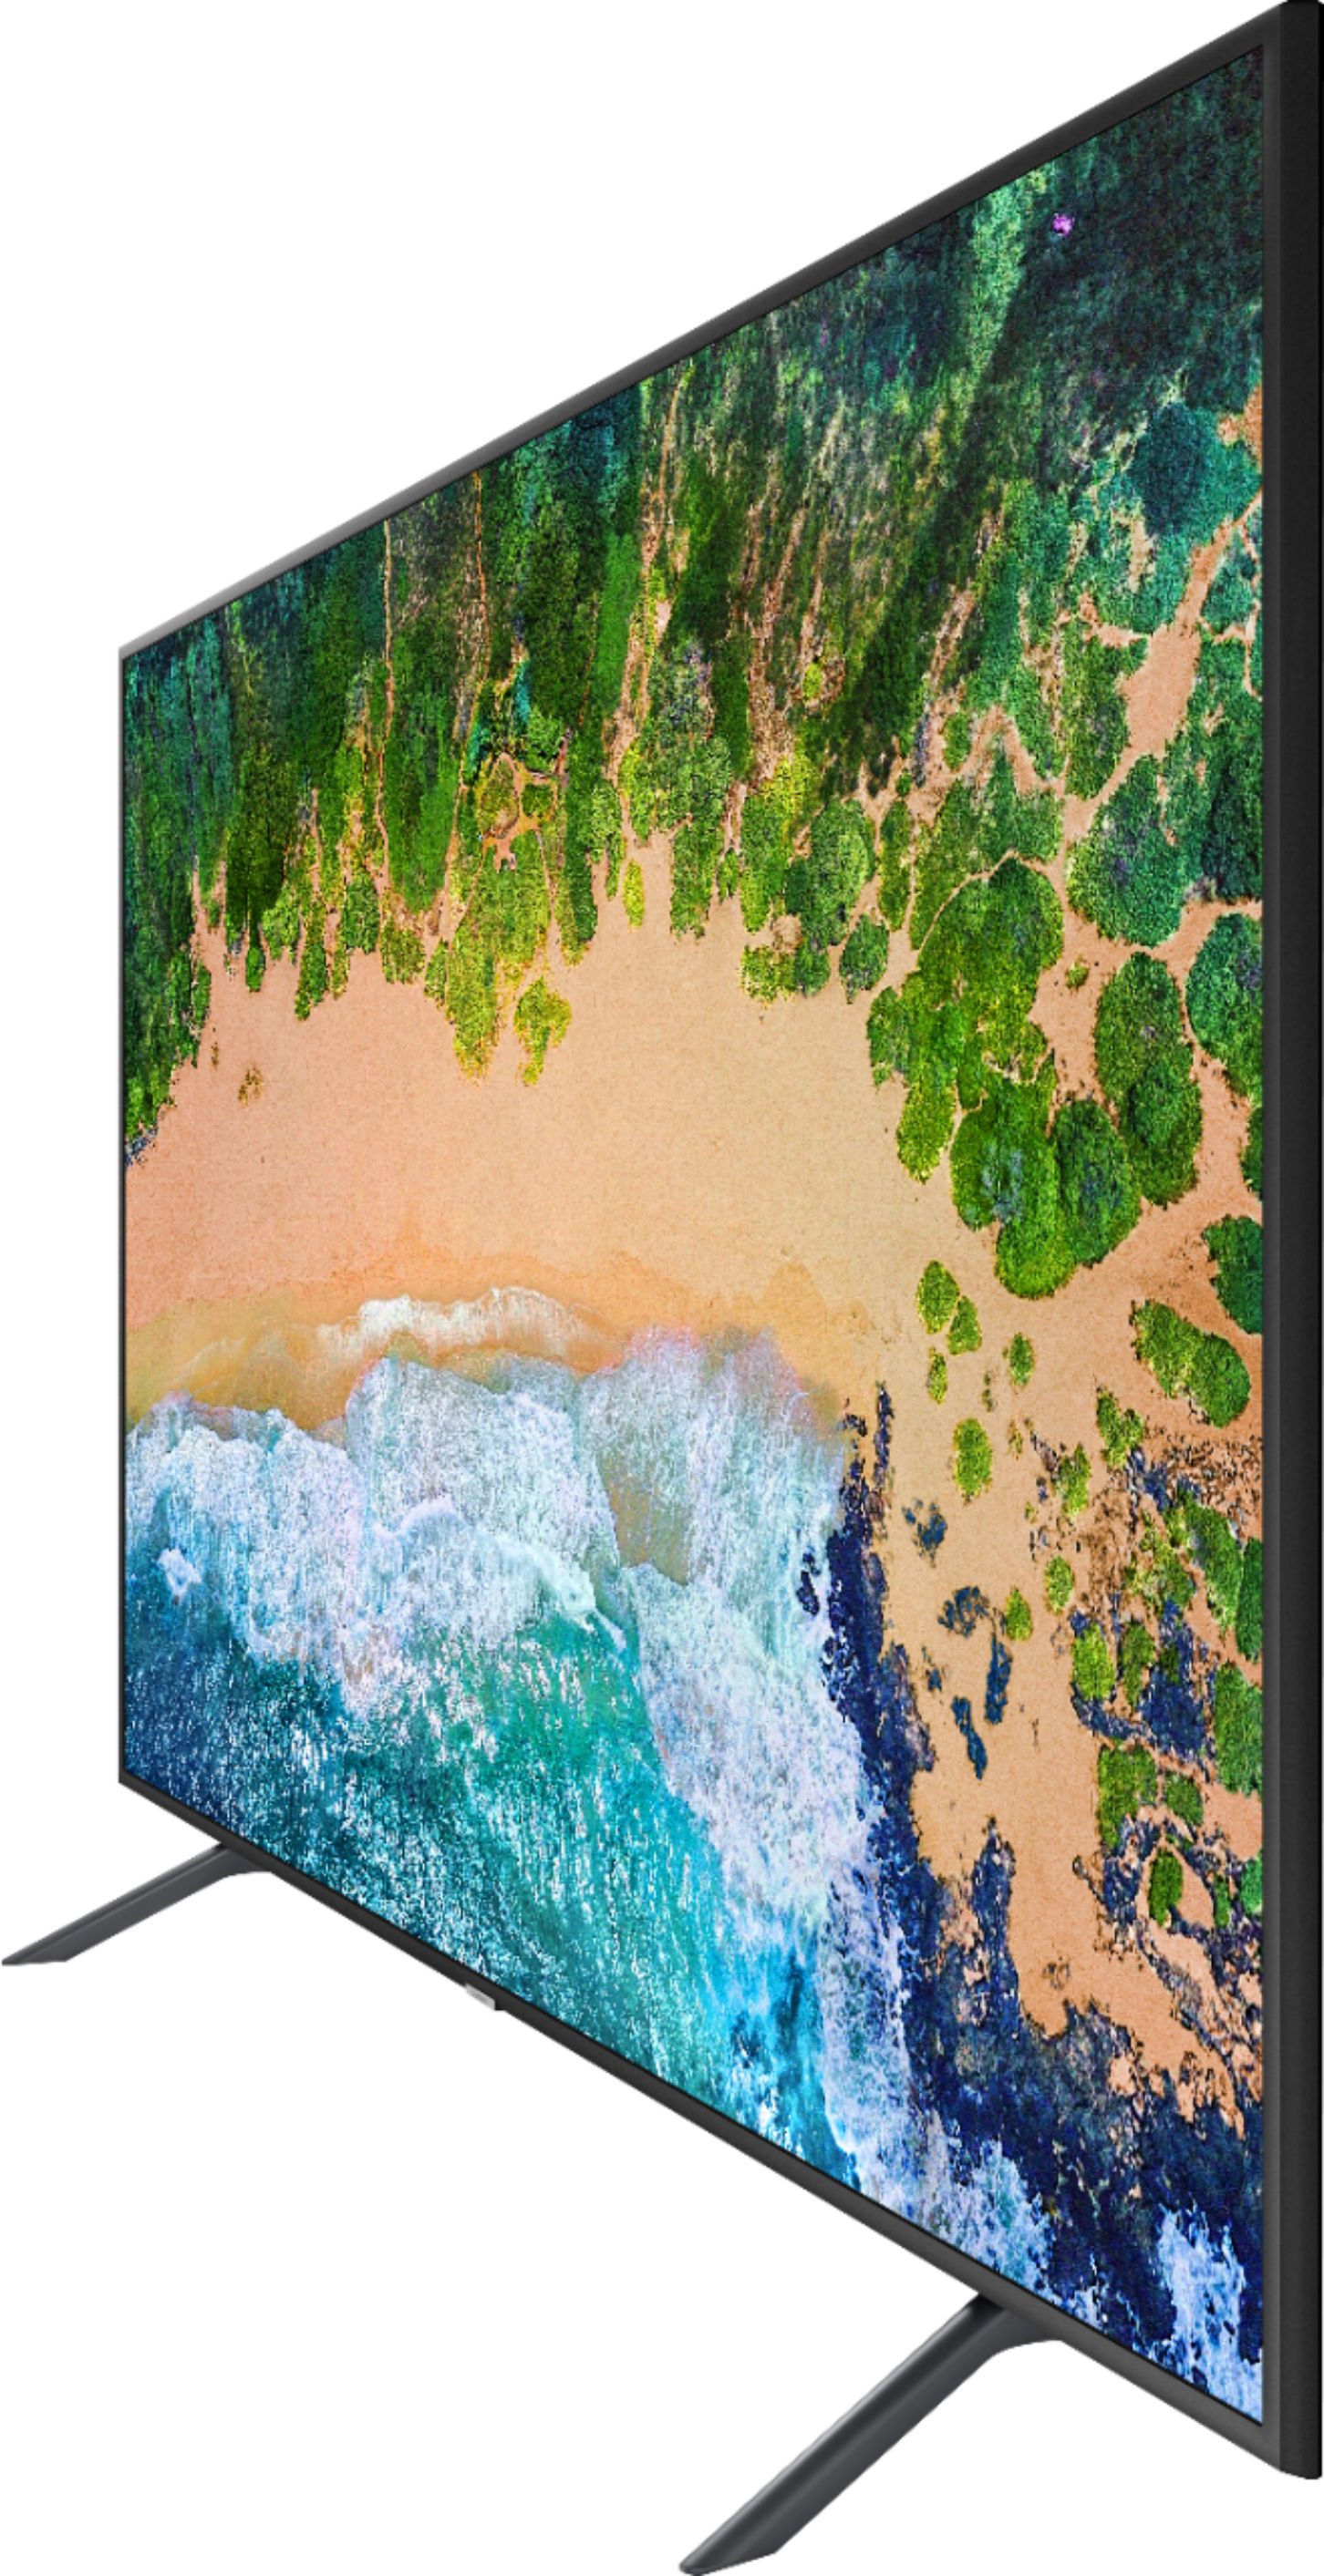 44+ Samsung uhd 4k smart tv nu7100 series 7 review info